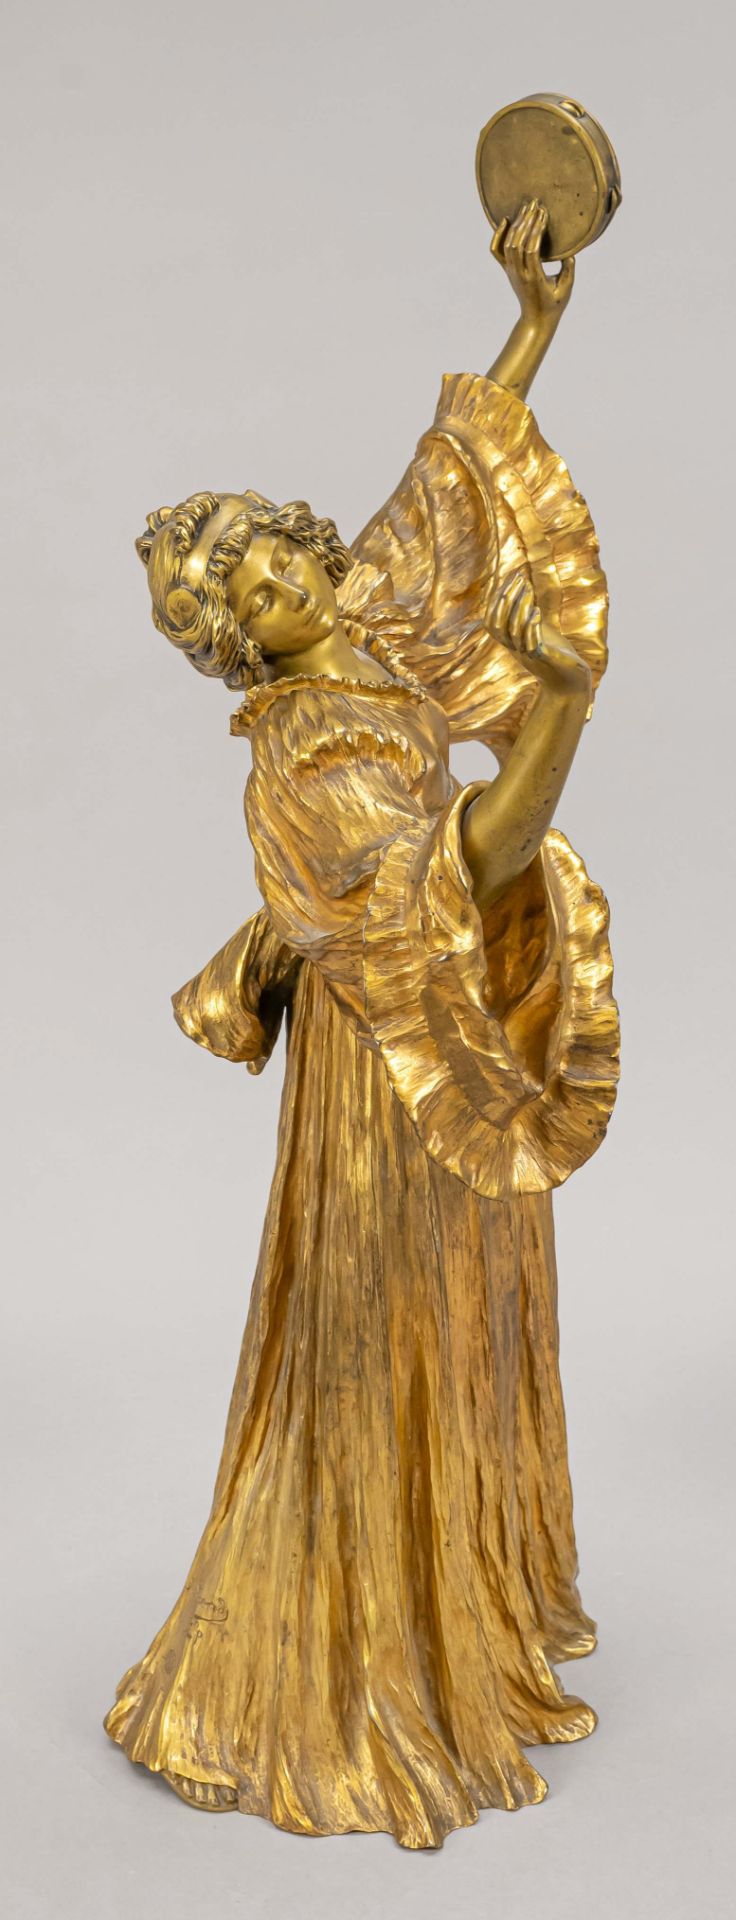 Léonard, Agathon. 1841 Lille - 1923 Paris. Danseuse au tambourin. 1905. bronze, gilded, signed u. - Image 2 of 3